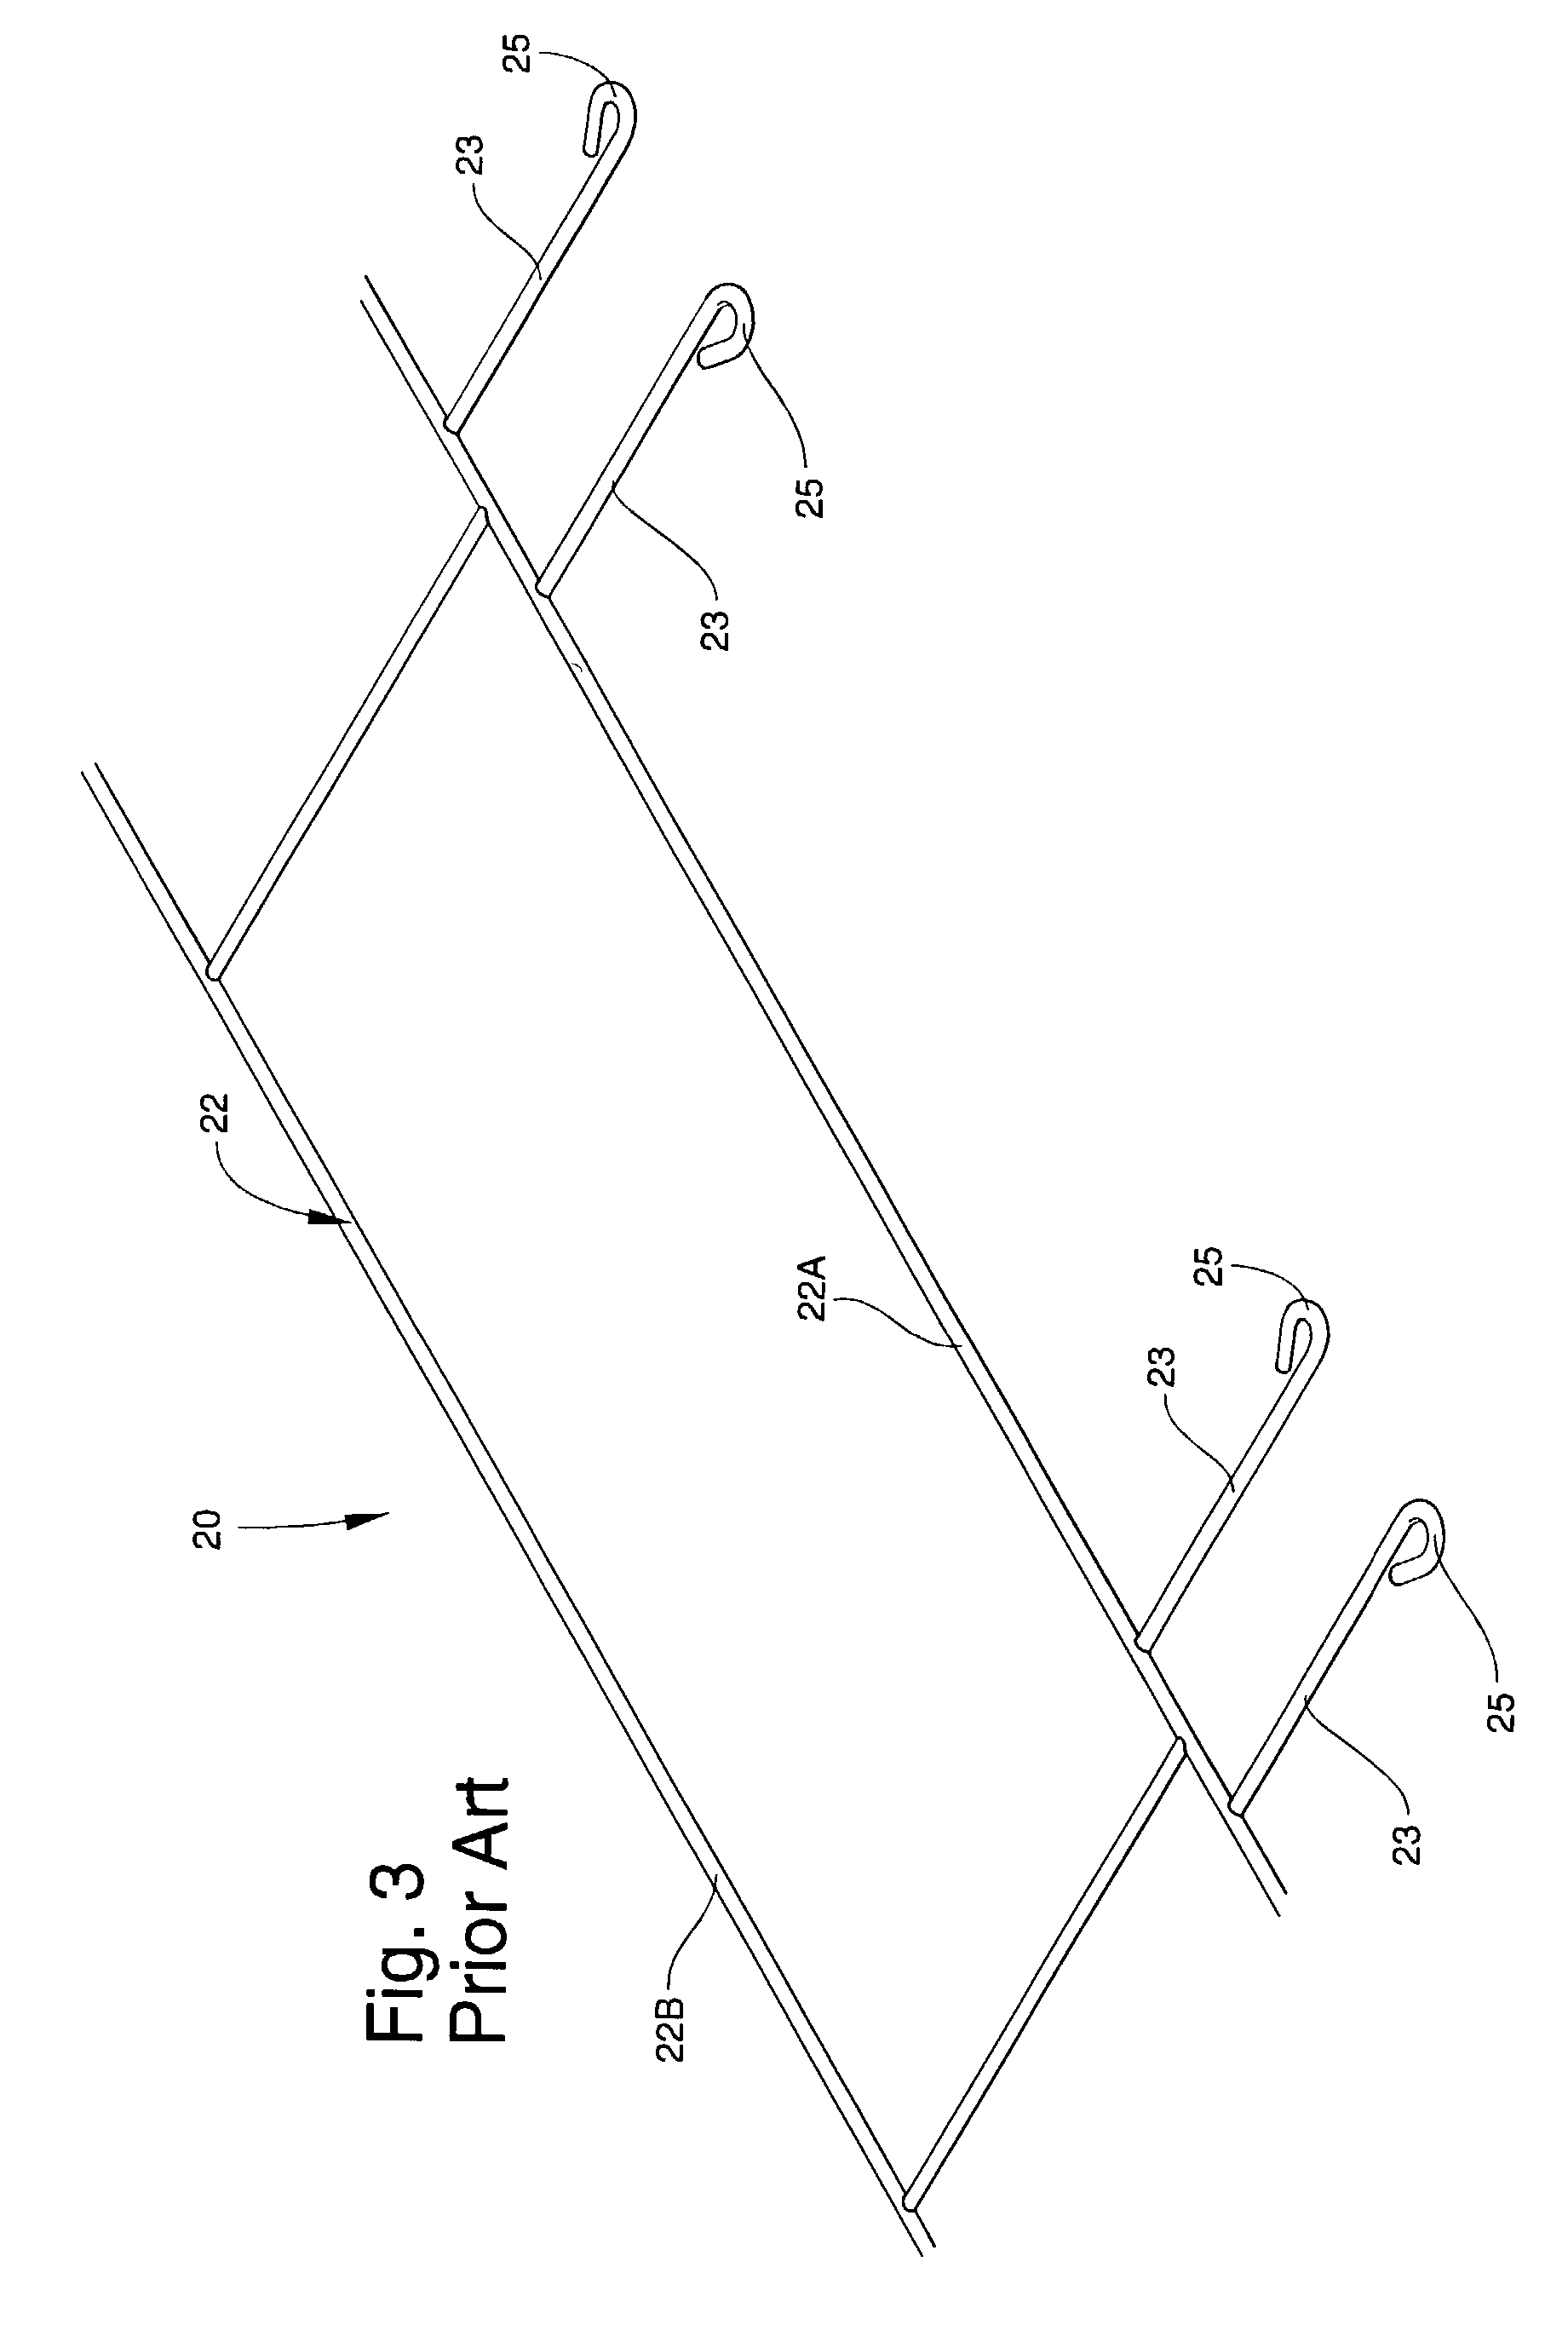 Masonry anchoring system